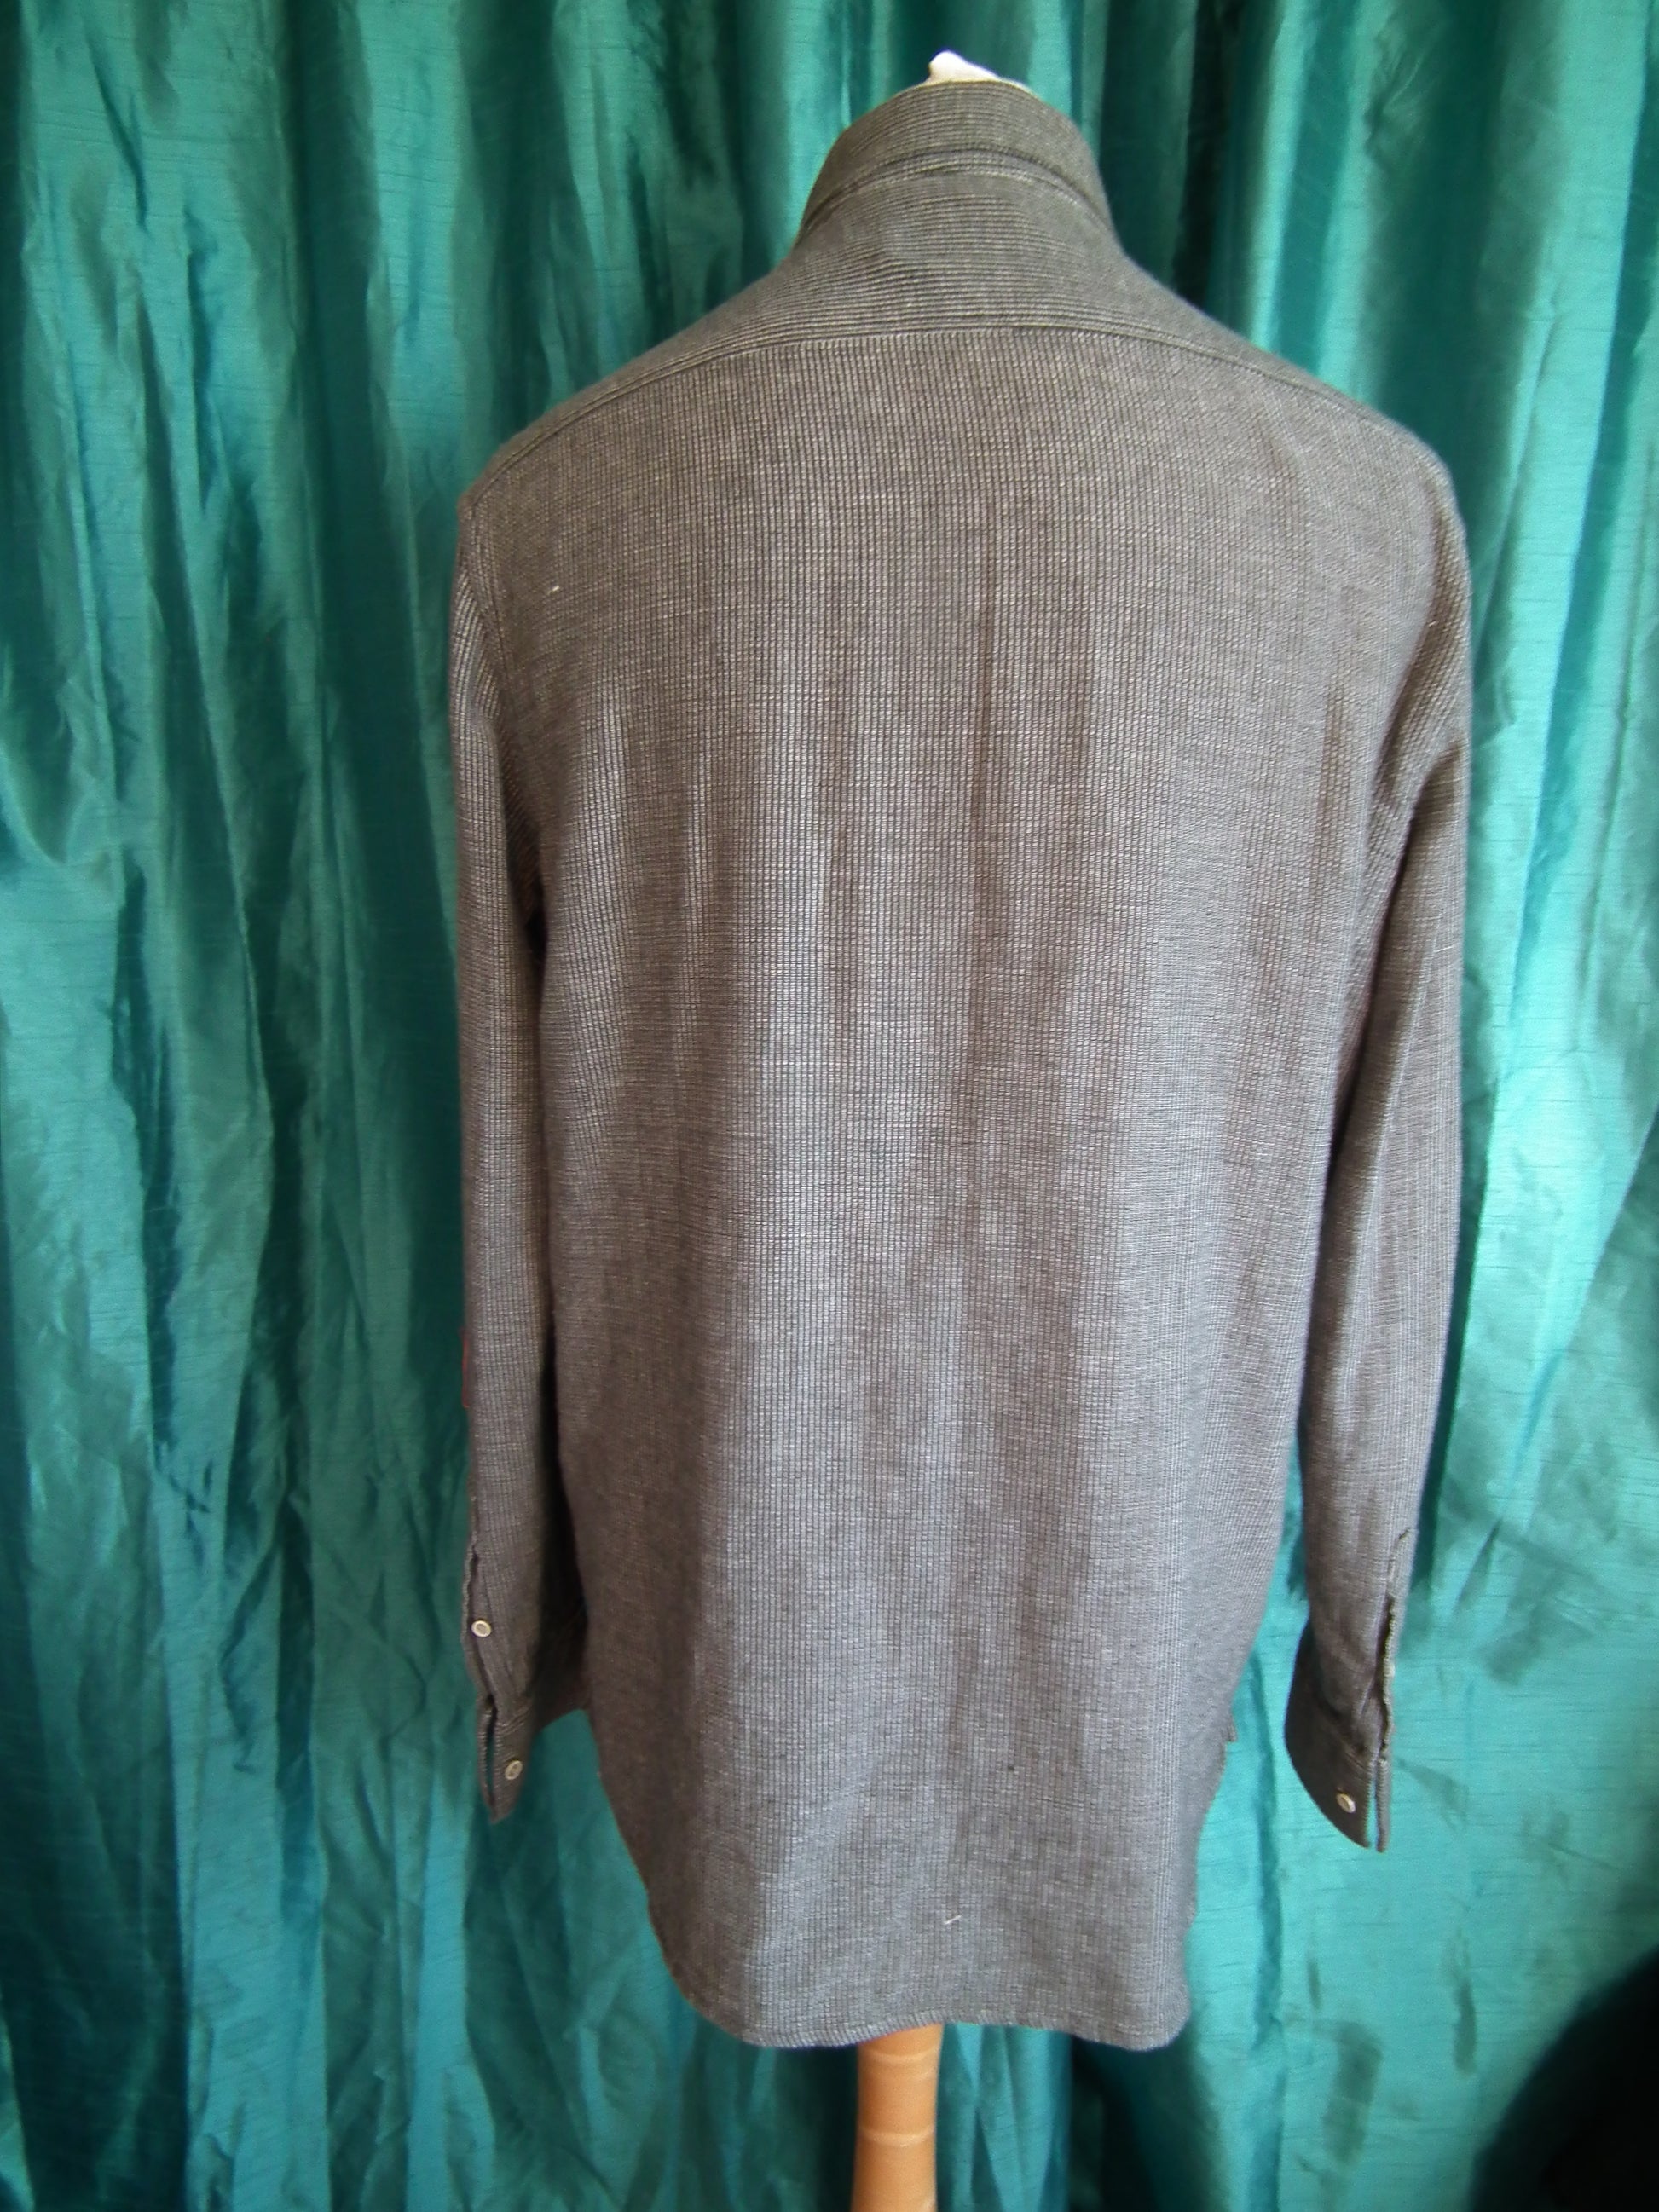 Bespoke PUnk shirt-green, size Large. ch 42/44", long sleeve, 100%cotton, warm Wonkey Donkey Bazaar